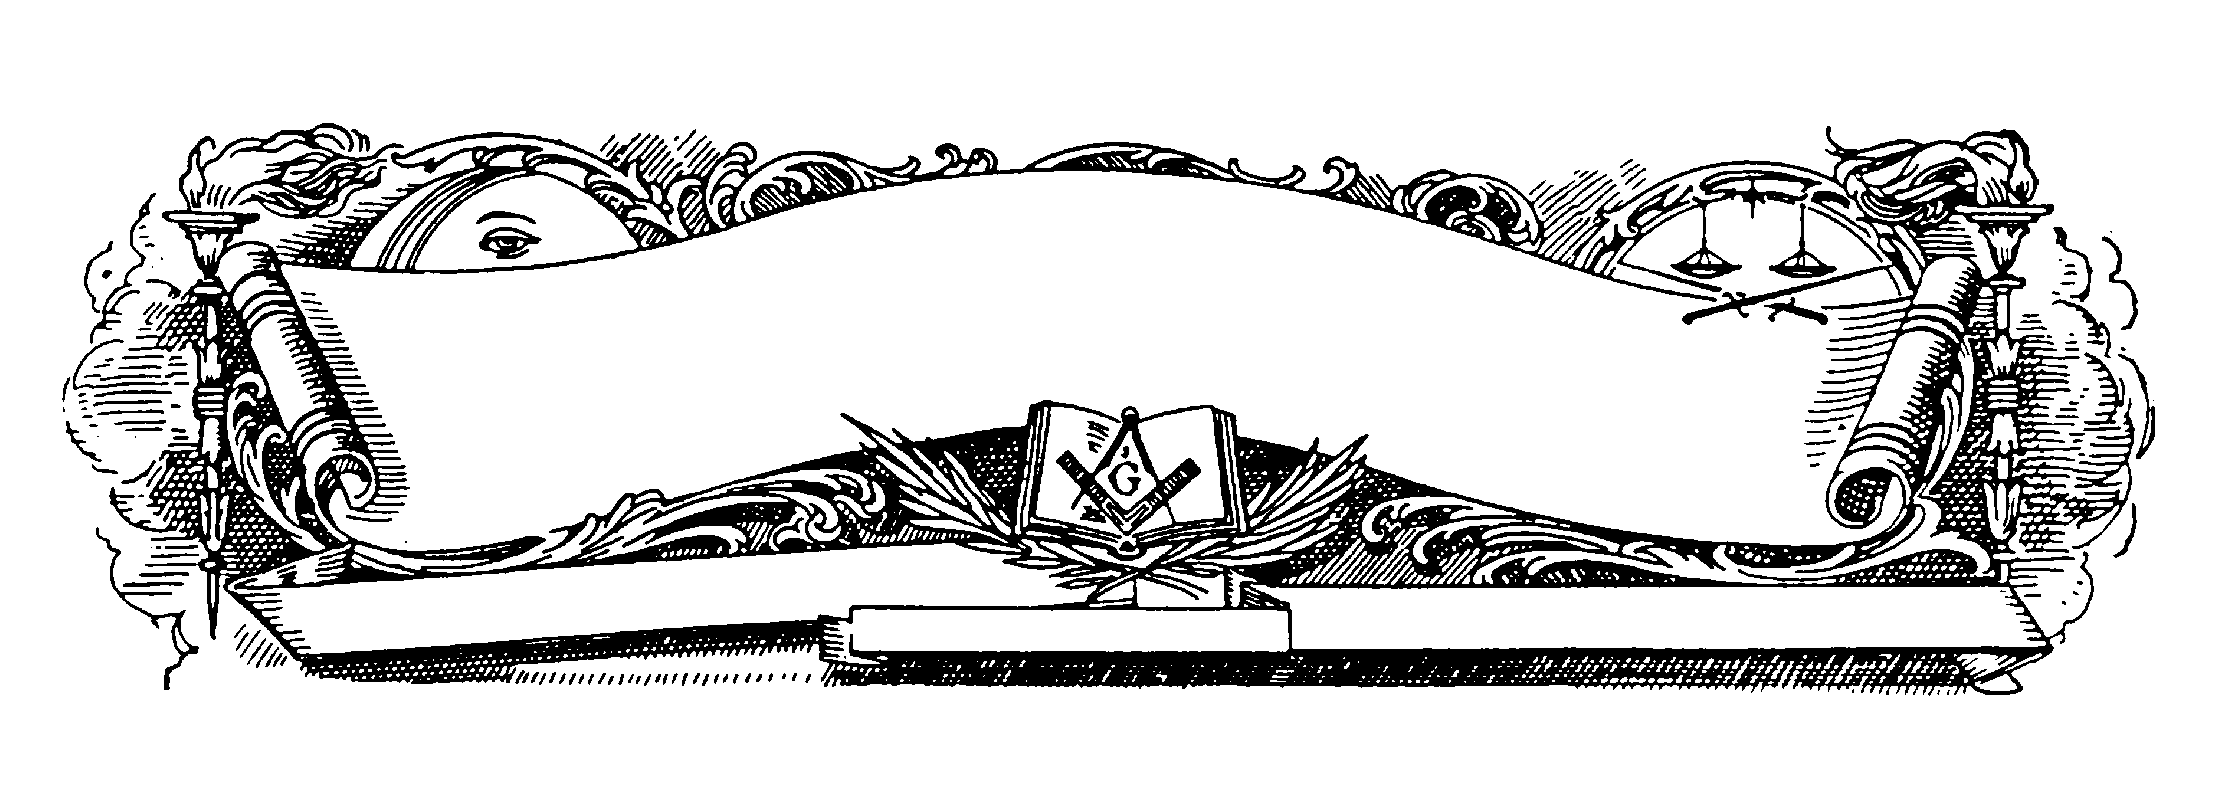 Masonic Art   Symbolic Lodge